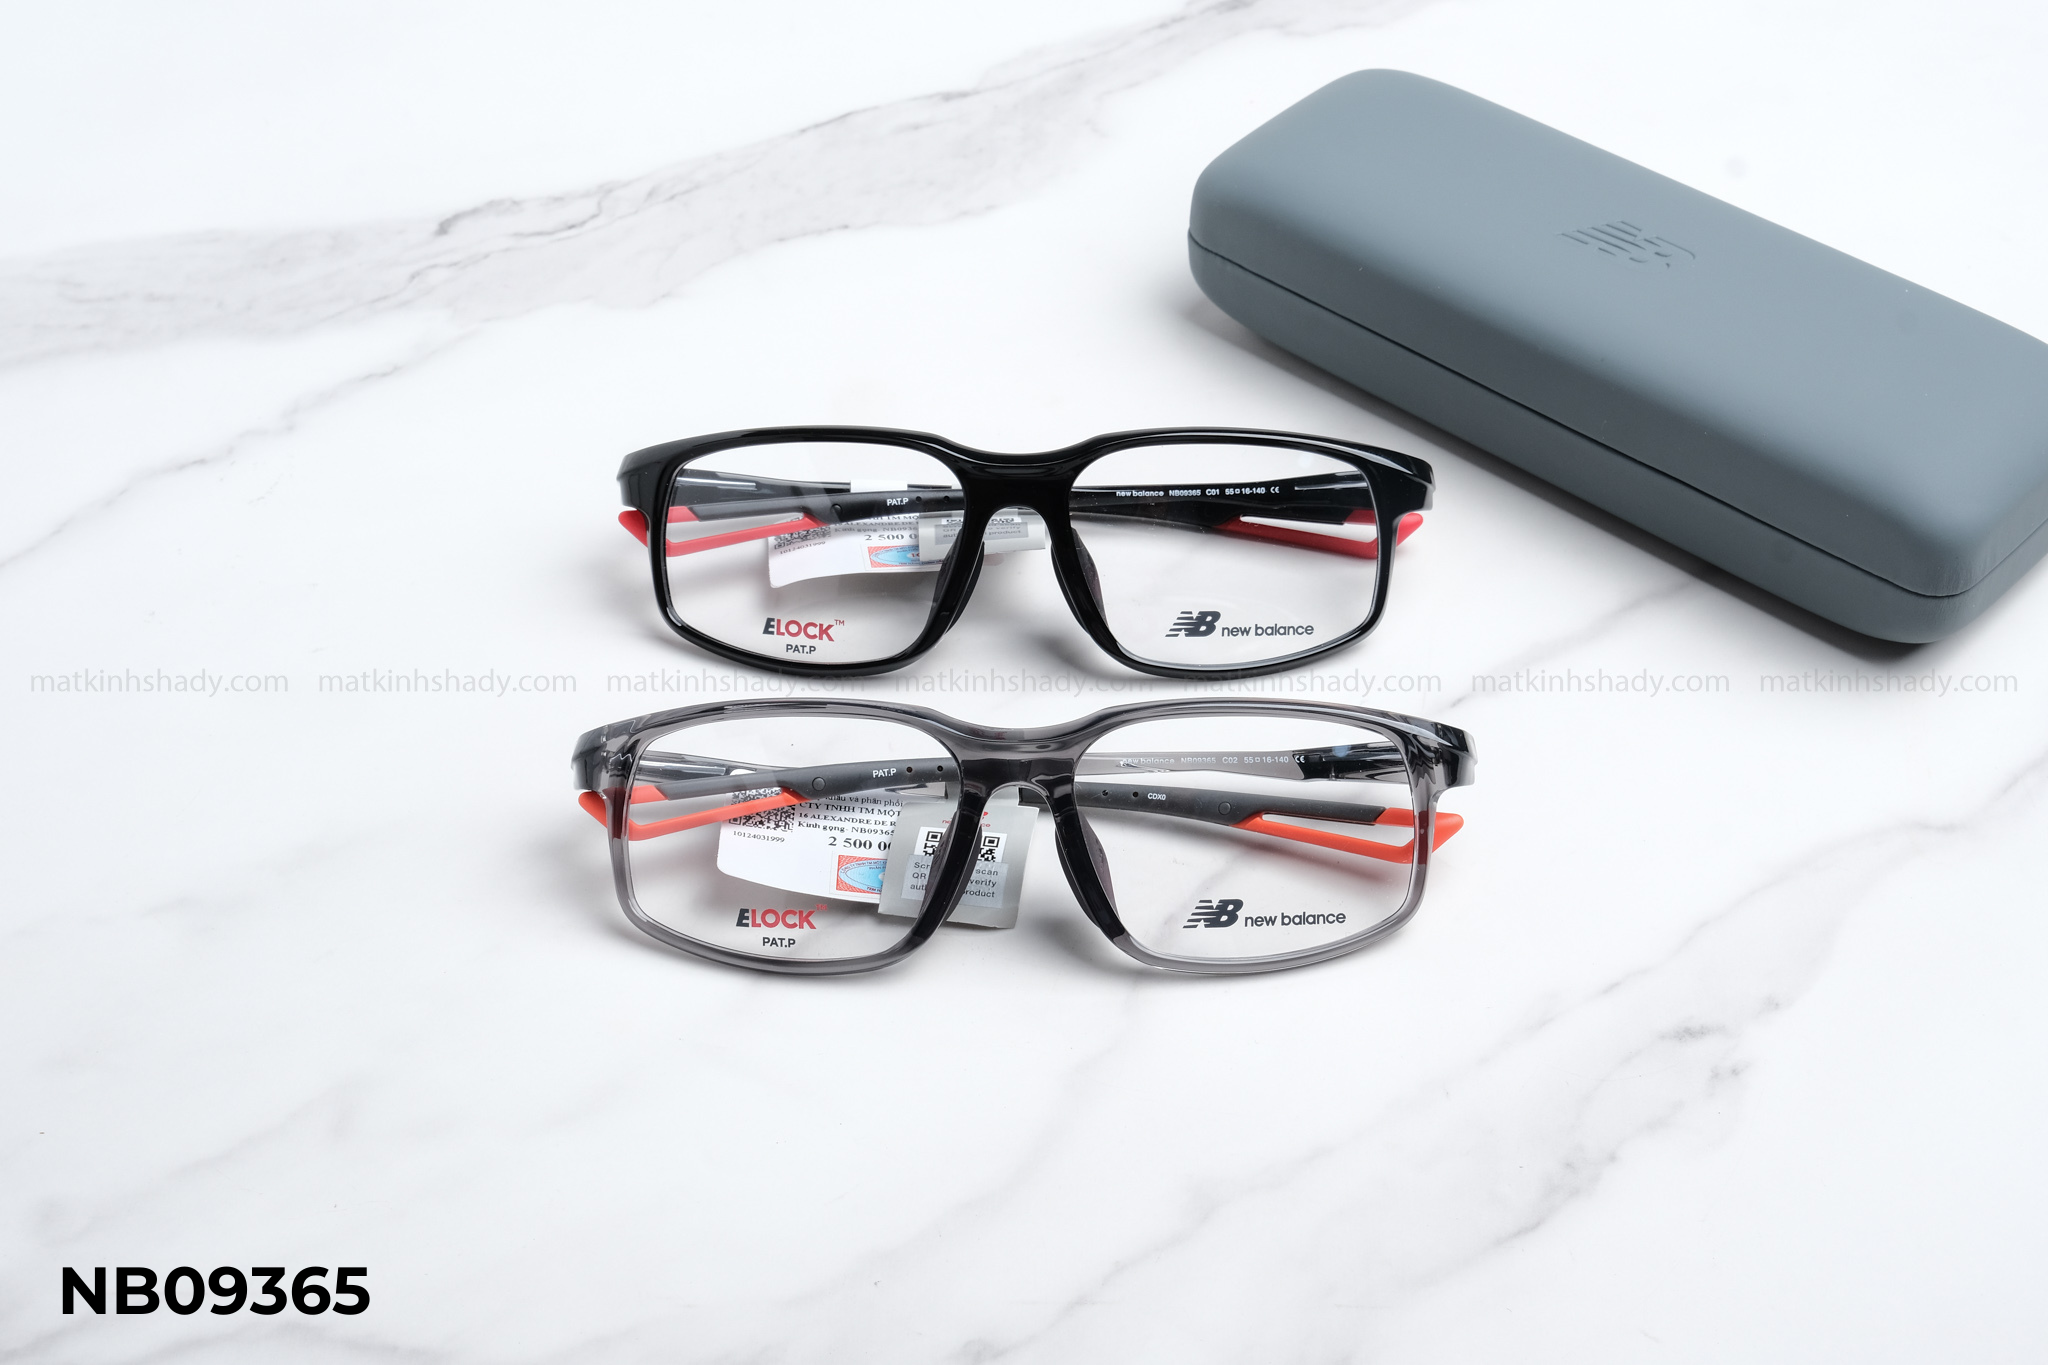  New Balance Eyewear - Glasses - NB09365 